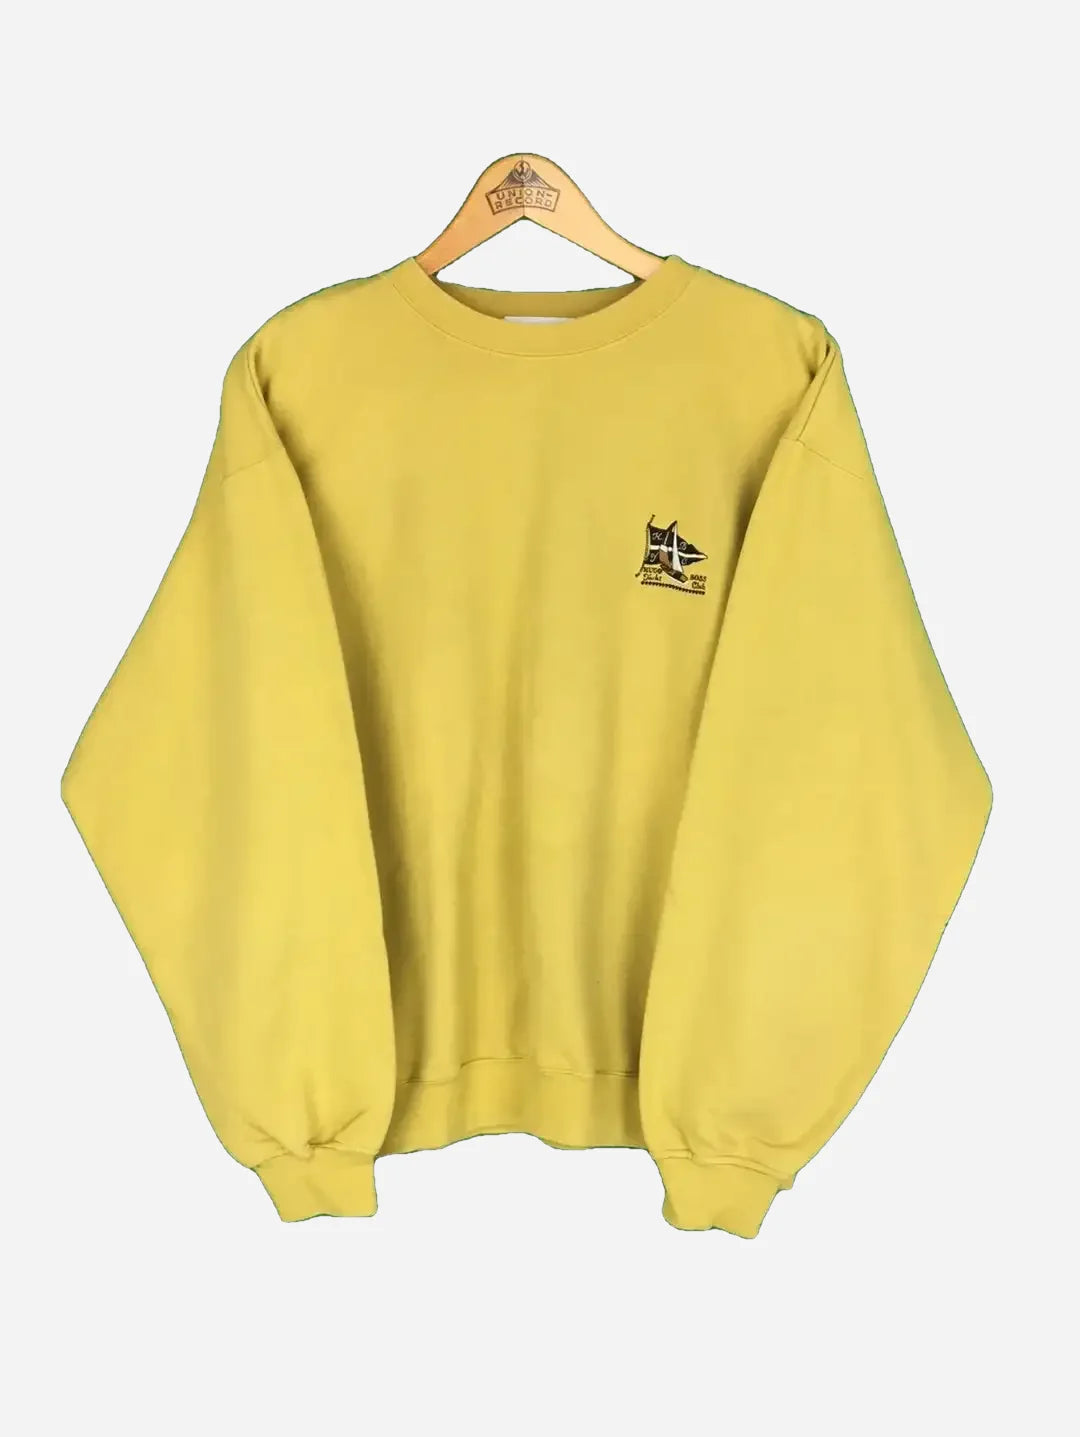 Hugo Boss Sweater (M)